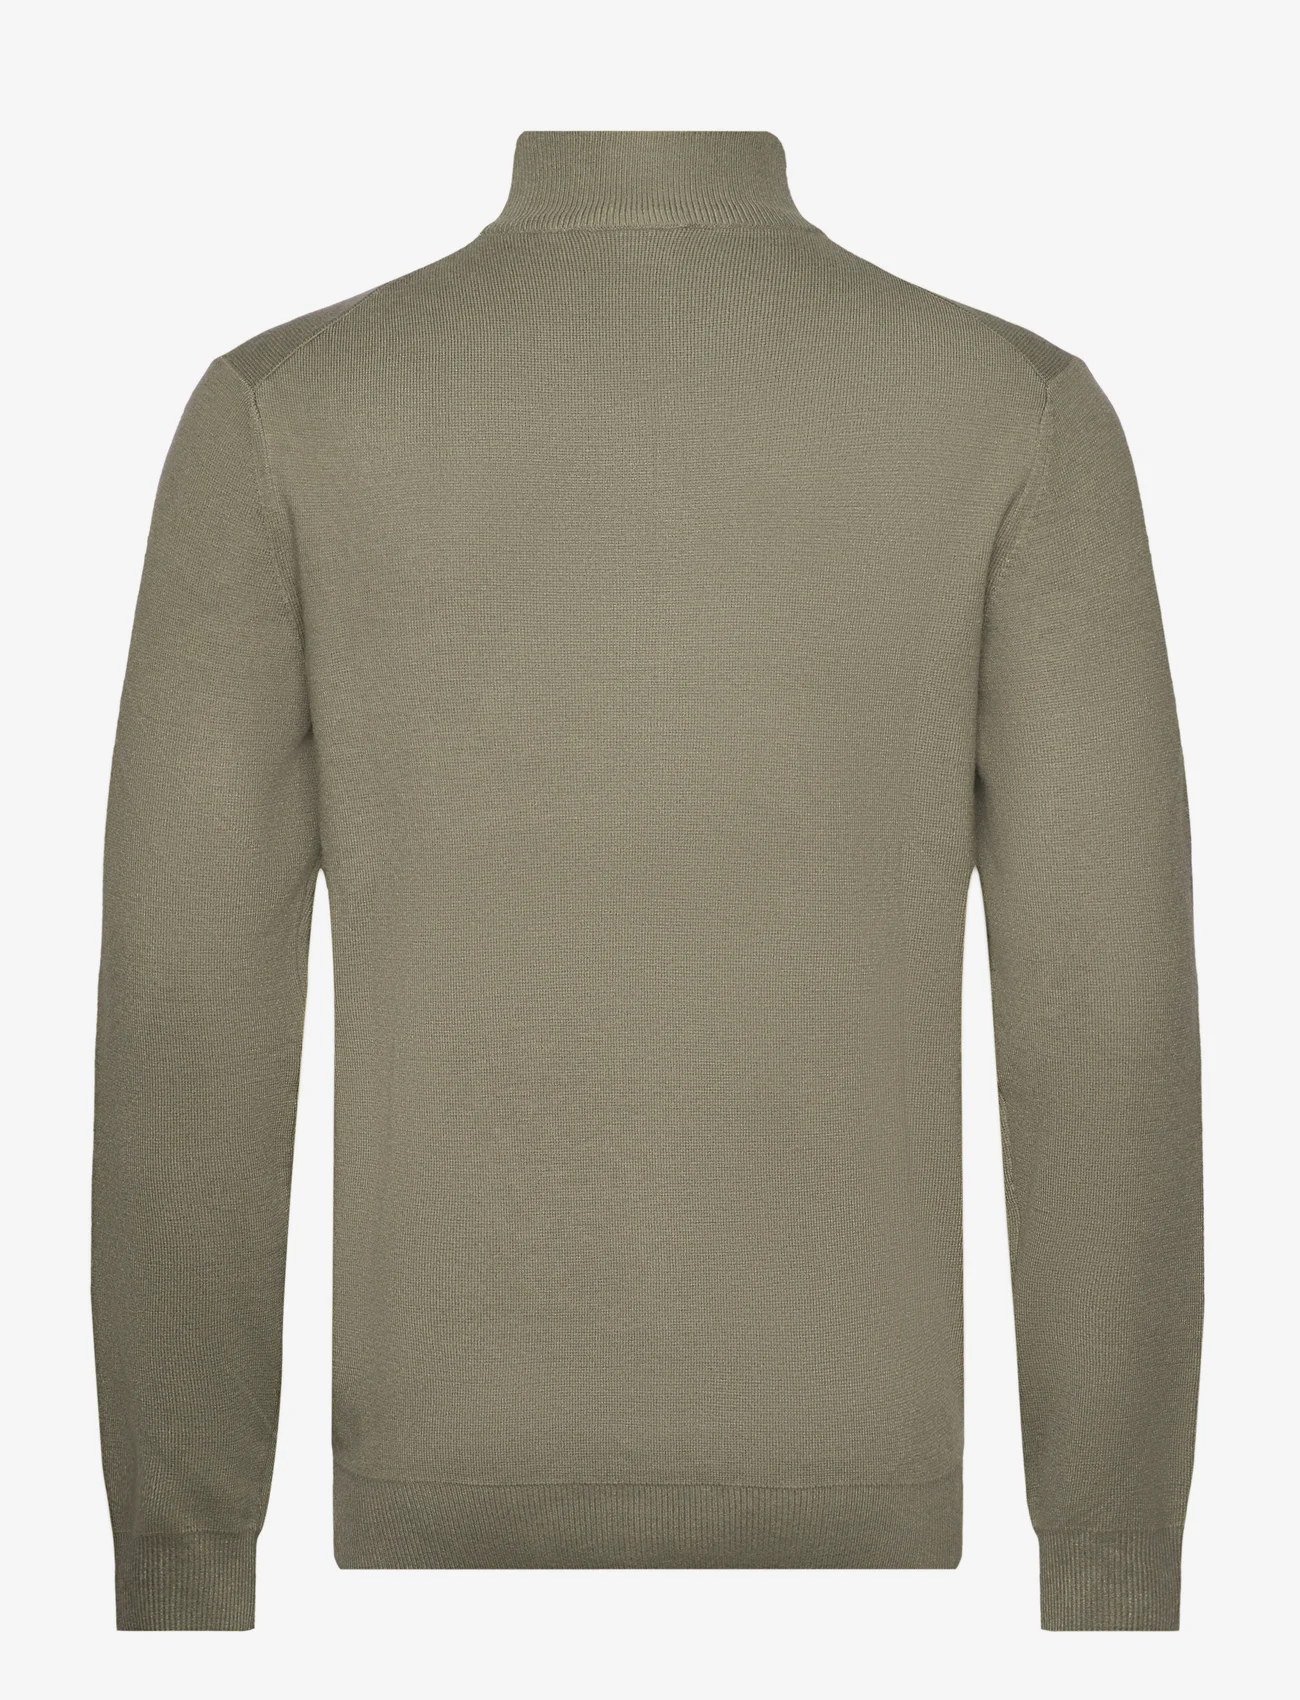 Lindbergh - Ecovero half zip knit - män - army - 1